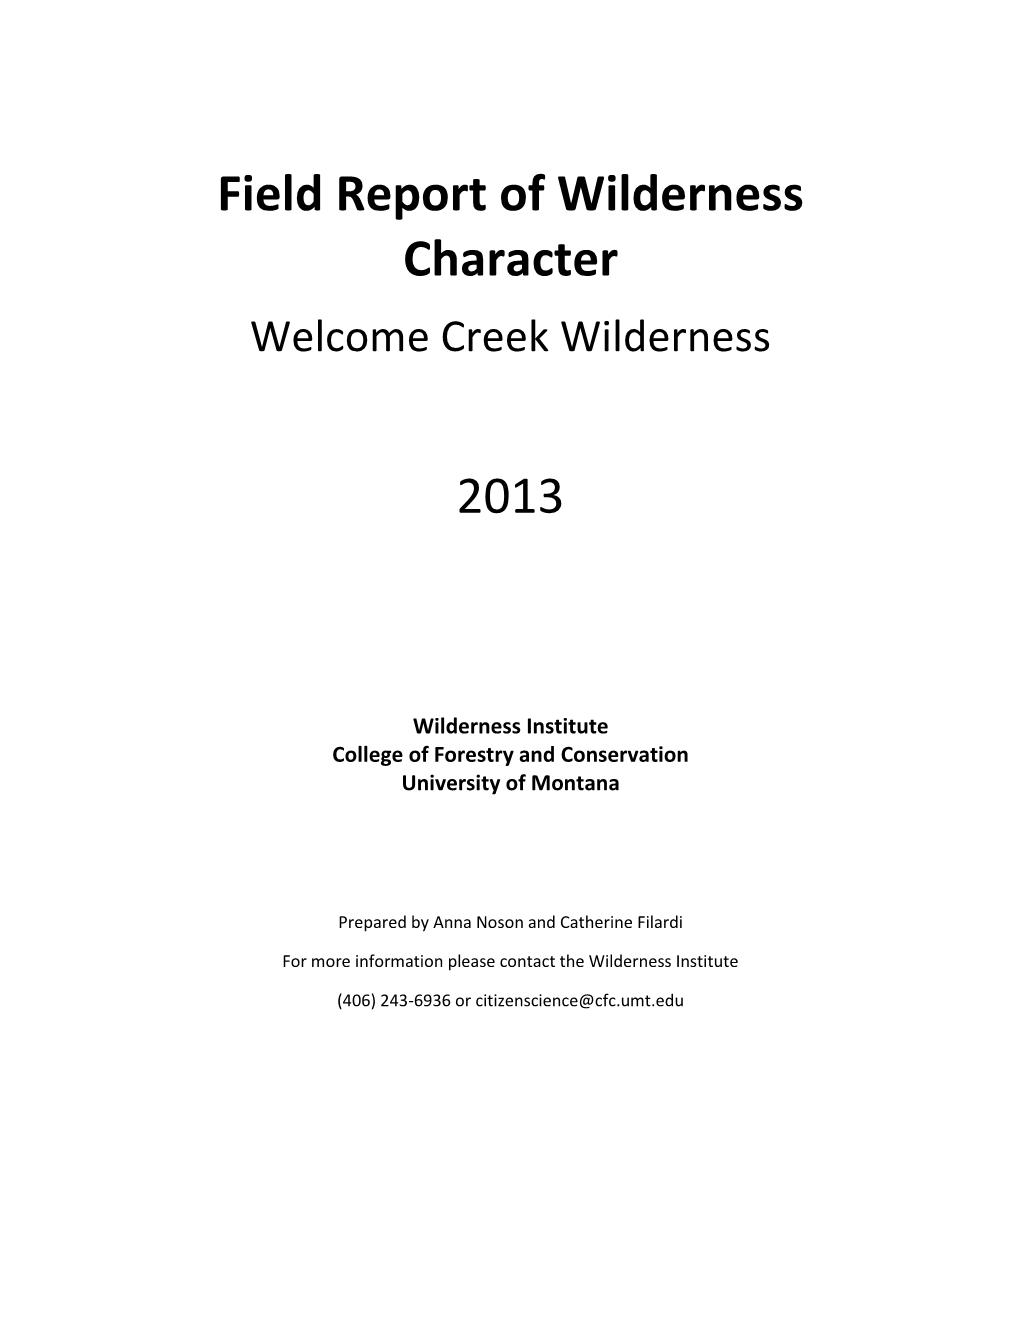 Wilderness Character Monitoring Needs